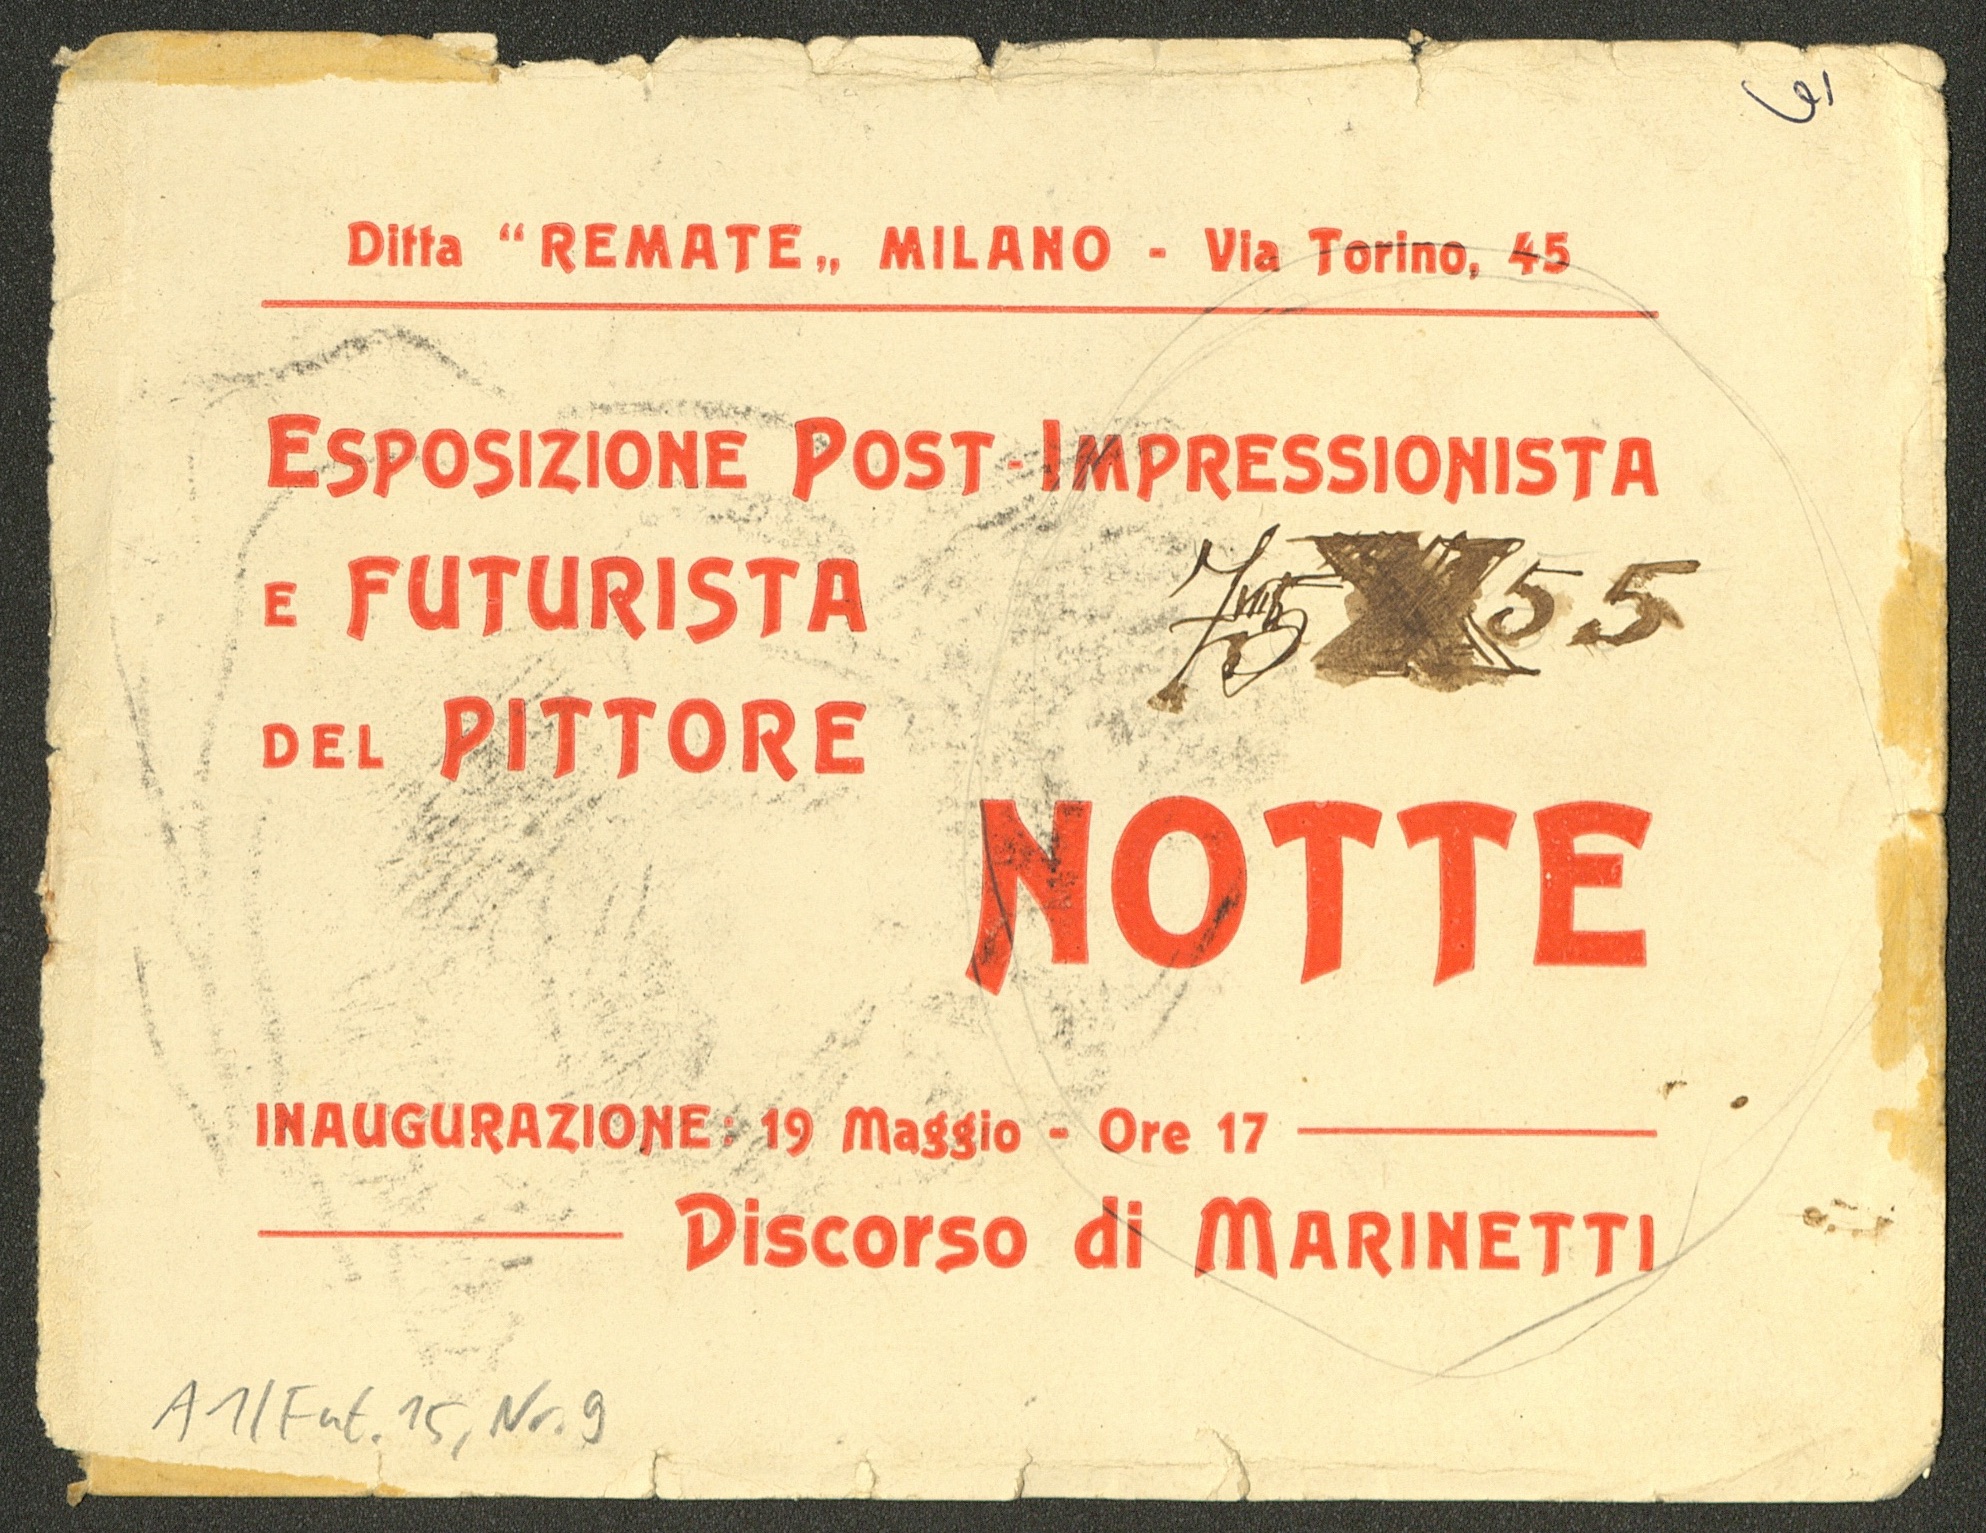 Emilio Notte, DISEGNO A MATITA, Milano 1919 (Invitations Card with Original Drawing) © Emilio Notte